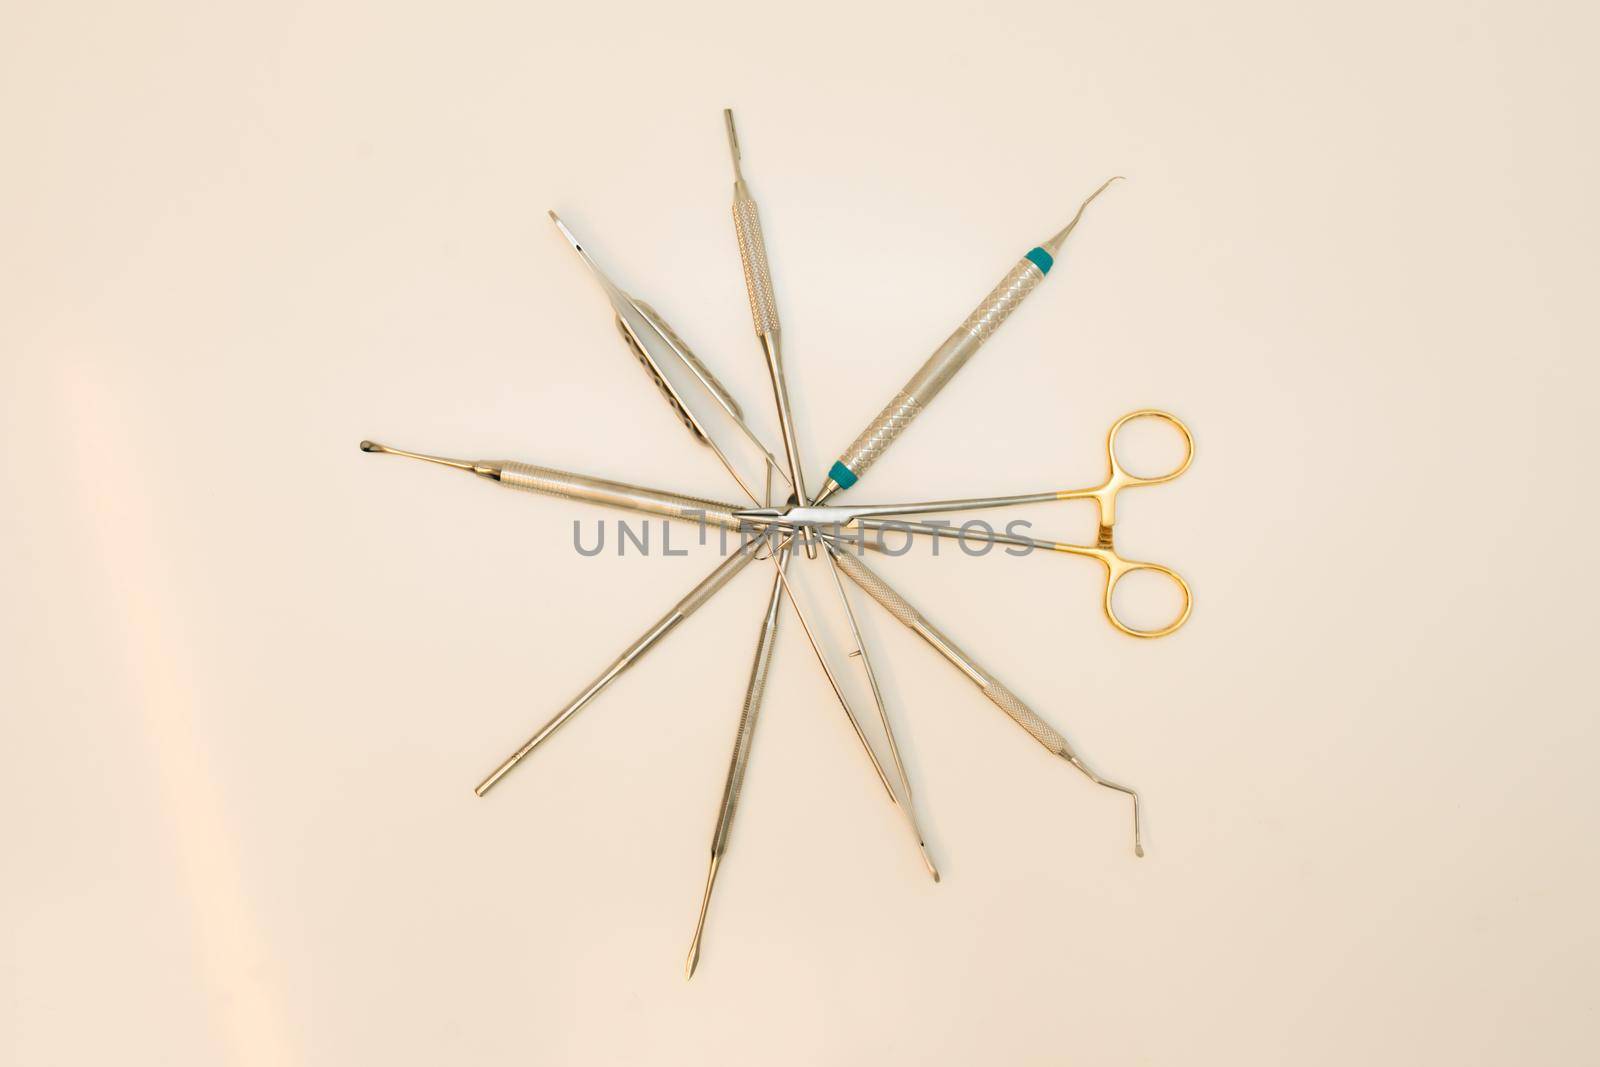 Dentist orthopedist tools. Dental implantation surgical set. Surgical kit of instruments used in dental implantology by uflypro